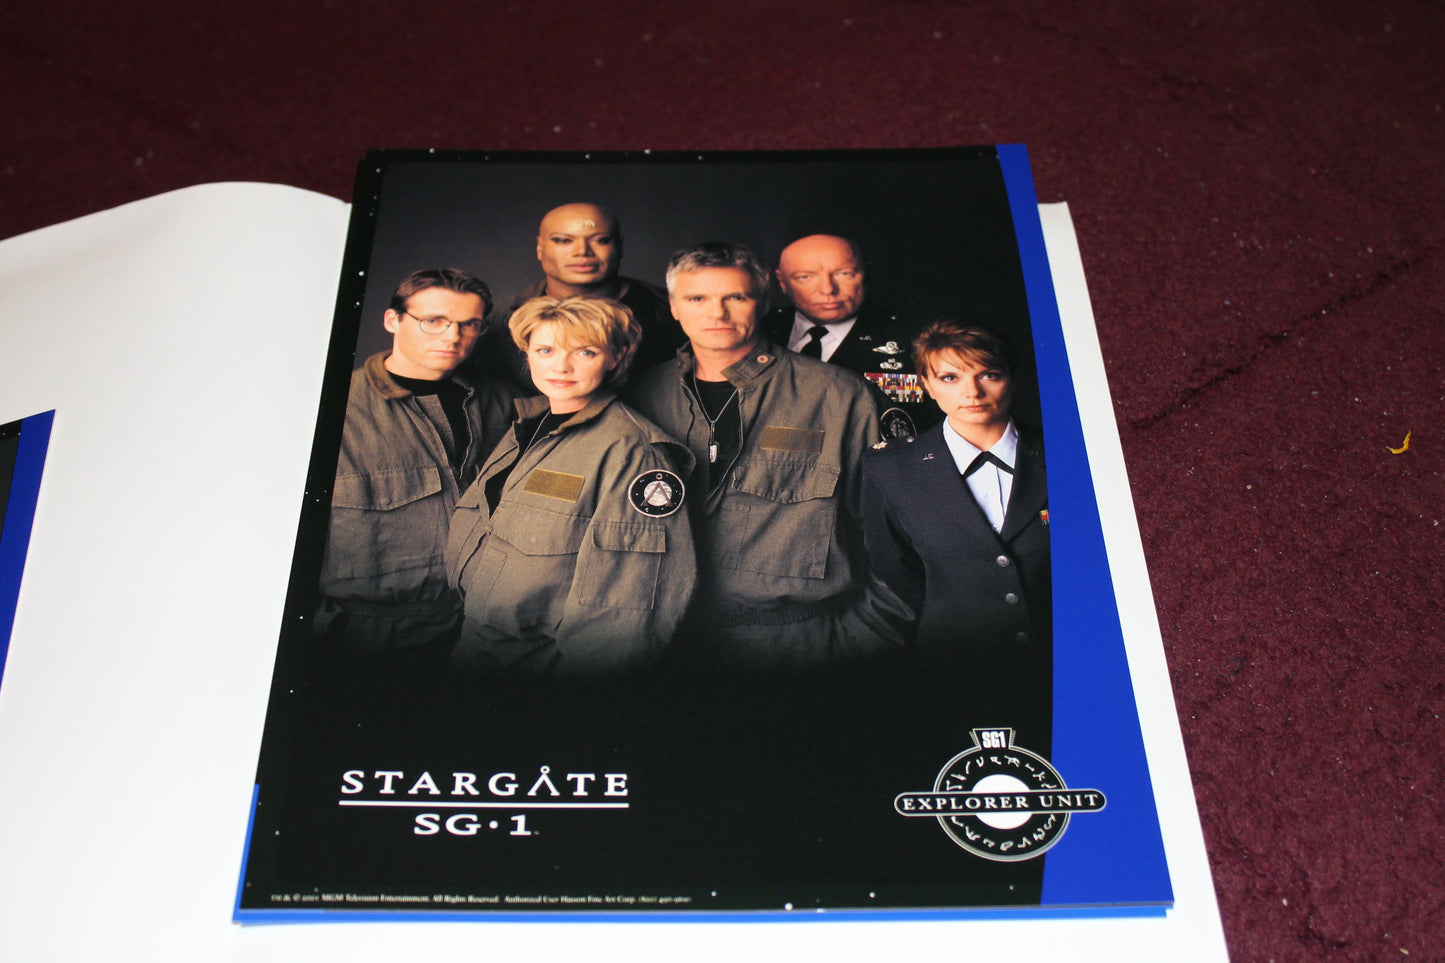 Stargate SG-1 Fan Club Photos, first promo kit